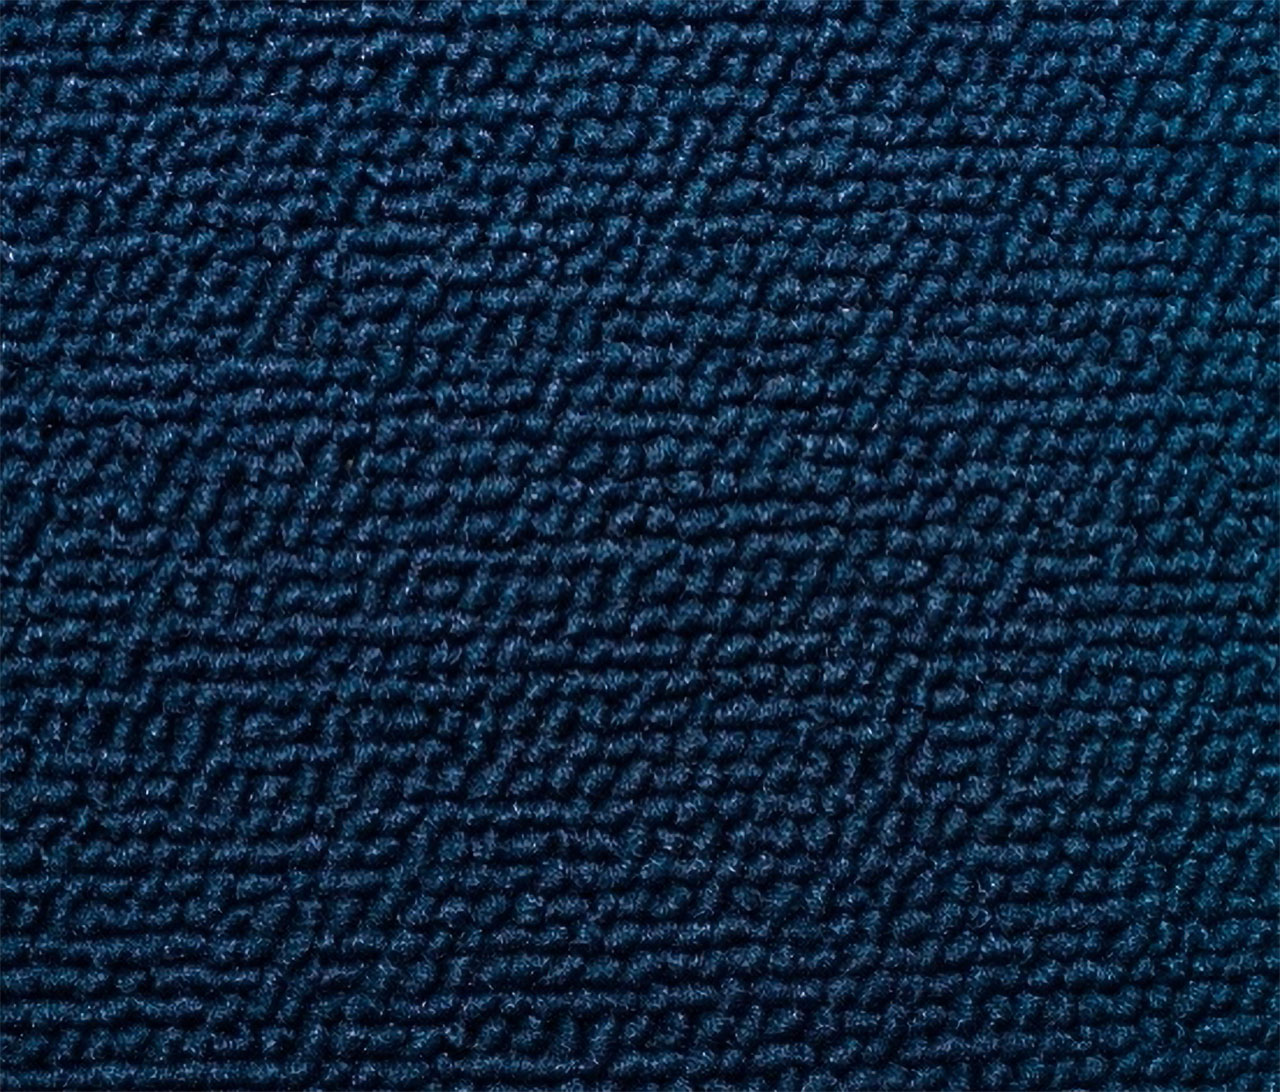 Holden Standard EJ Standard Ute B68 Columbine Blue with Feathertop Grey Carpet (Image 1 of 1)